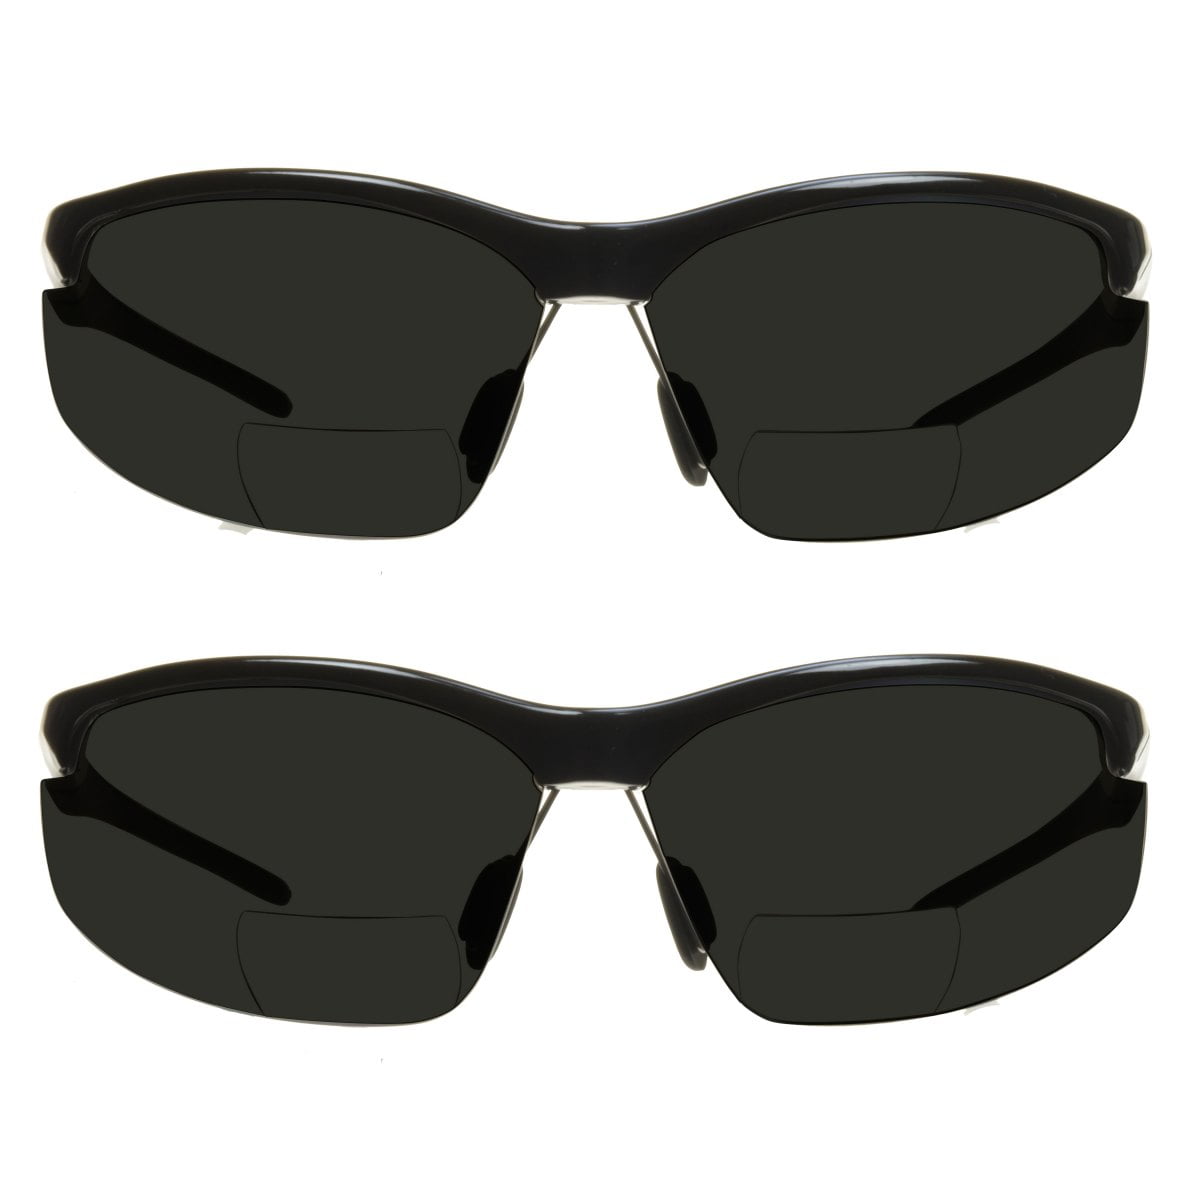 Prosport Bifocal Reading Sunglasses Ansi Z87 Safety Reader 1 00 2 Pairs Glossy Black Frame